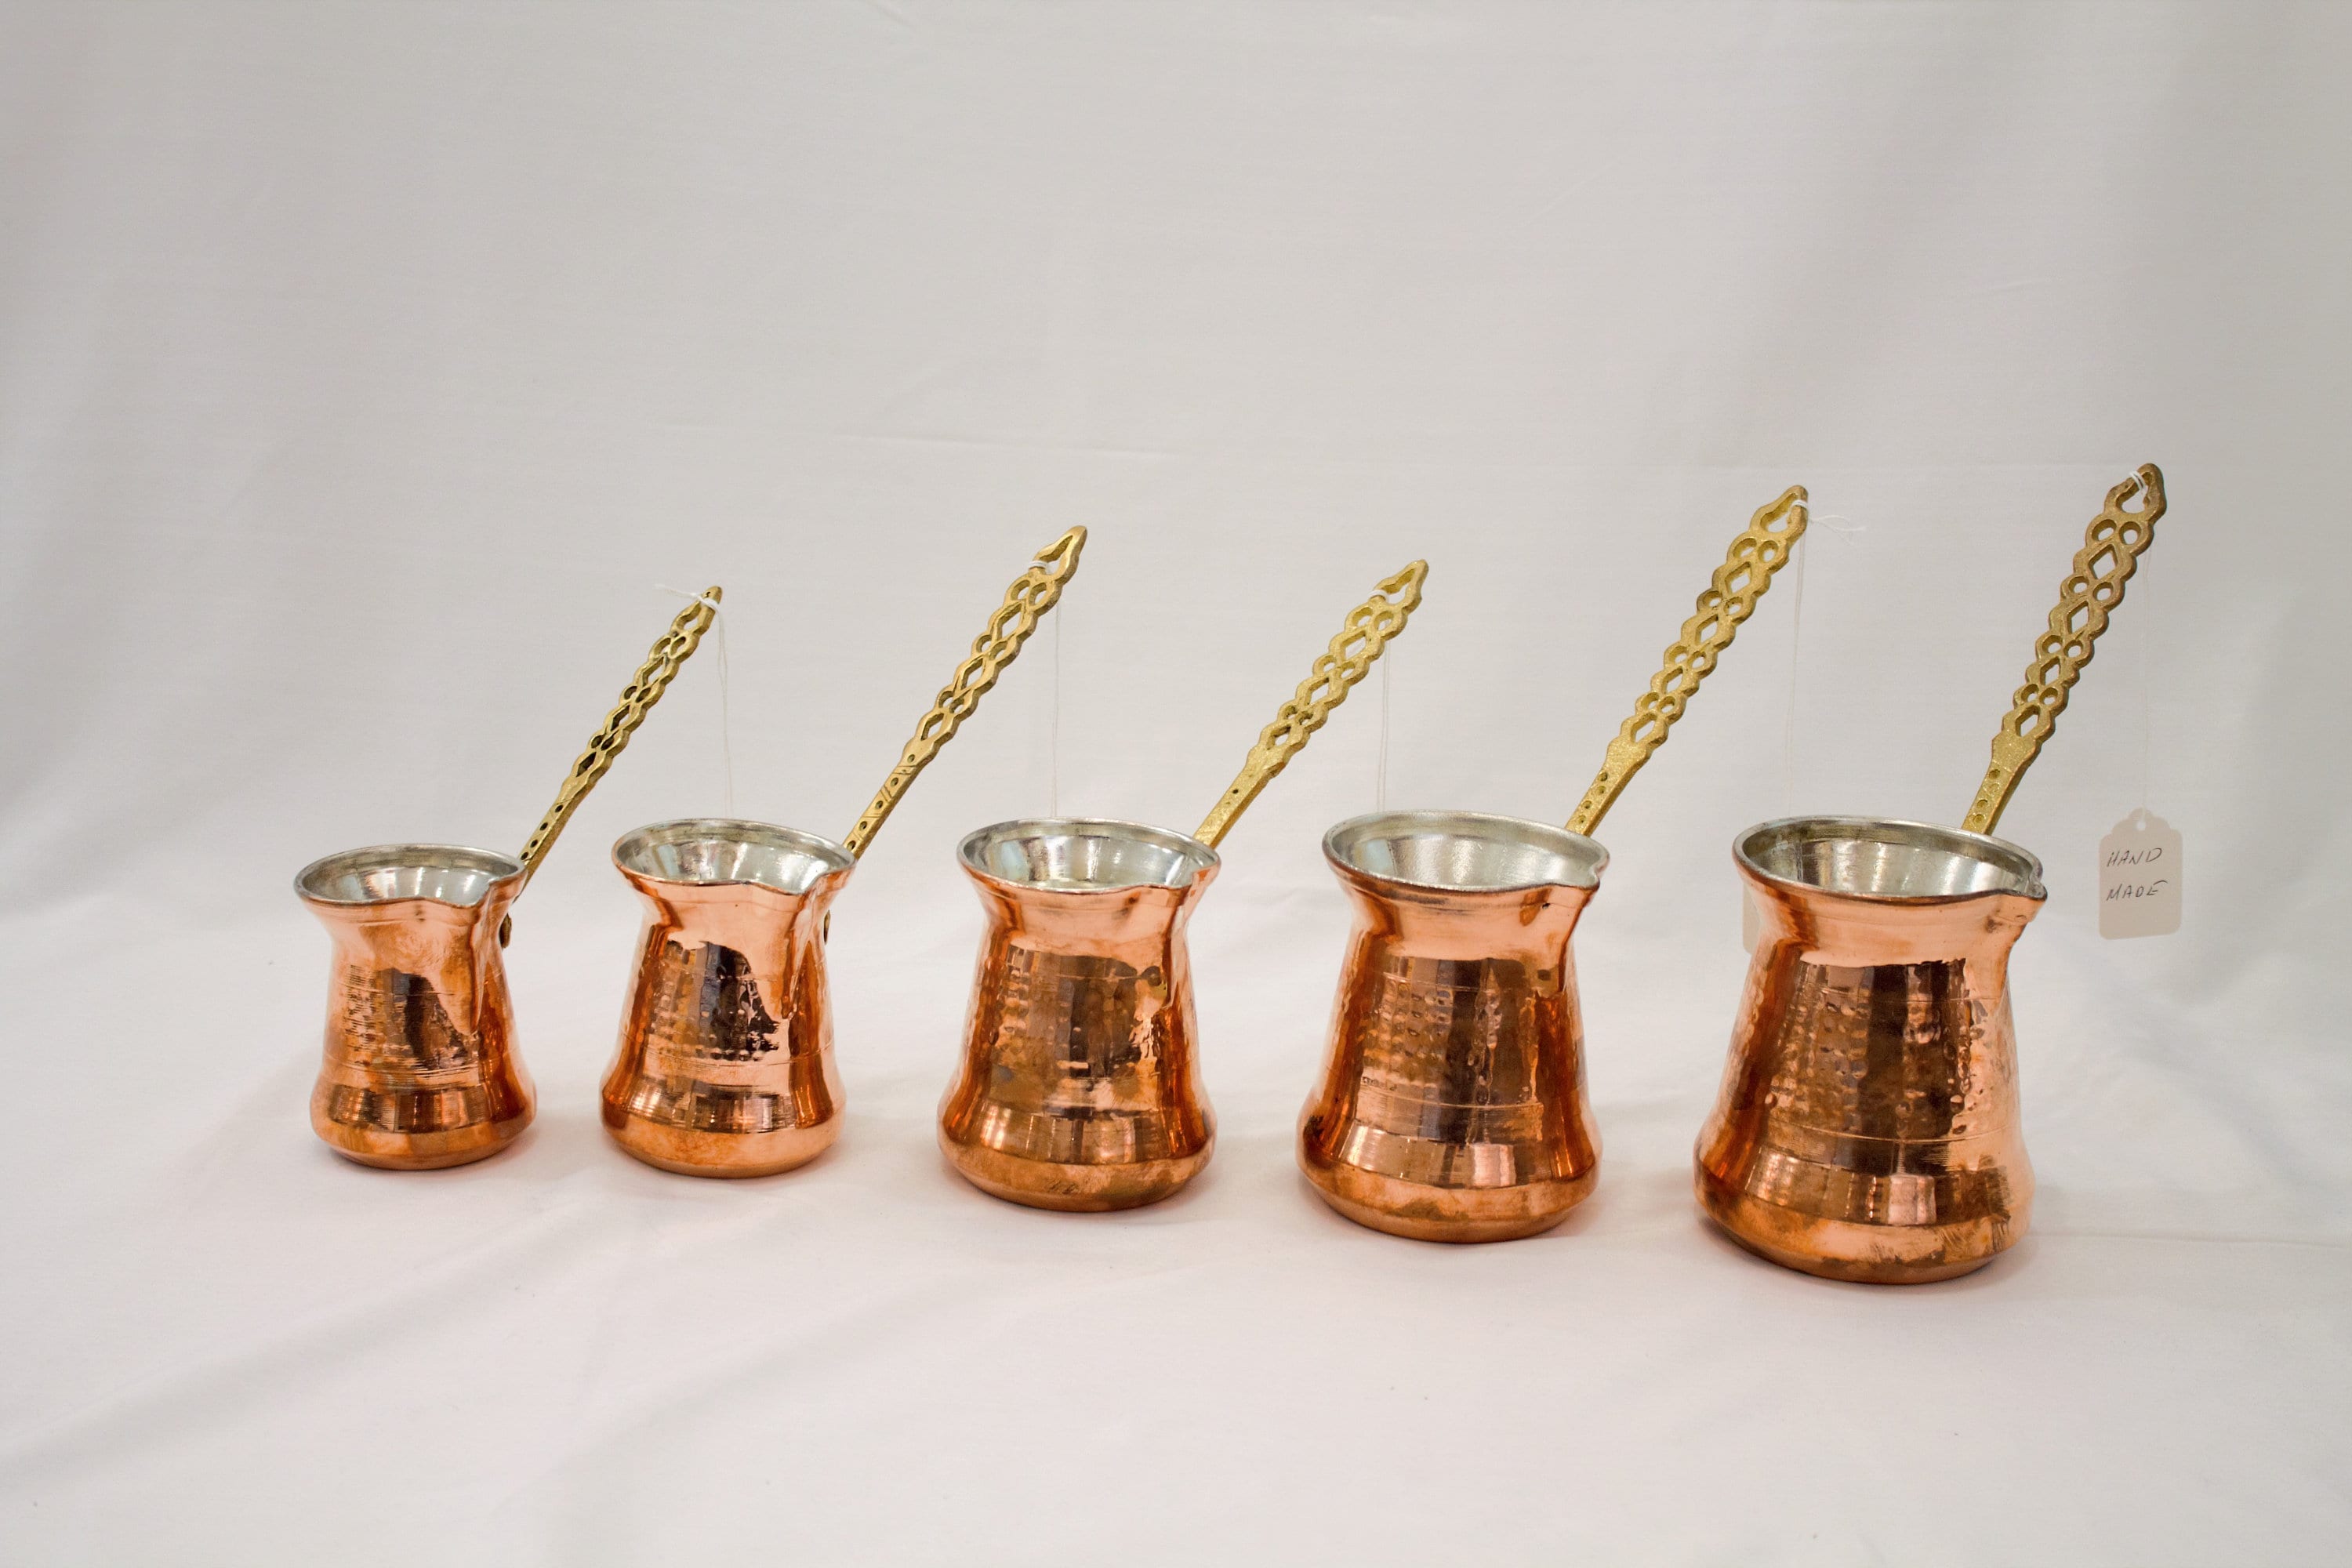 AEVVV Copper Turkish Coffee Maker 13 Oz - Stovetop Cezve Ibrik Vintage  Decor Engraved Ornament Springtime - Briki Greek Coffee Pot with Wooden  Handle